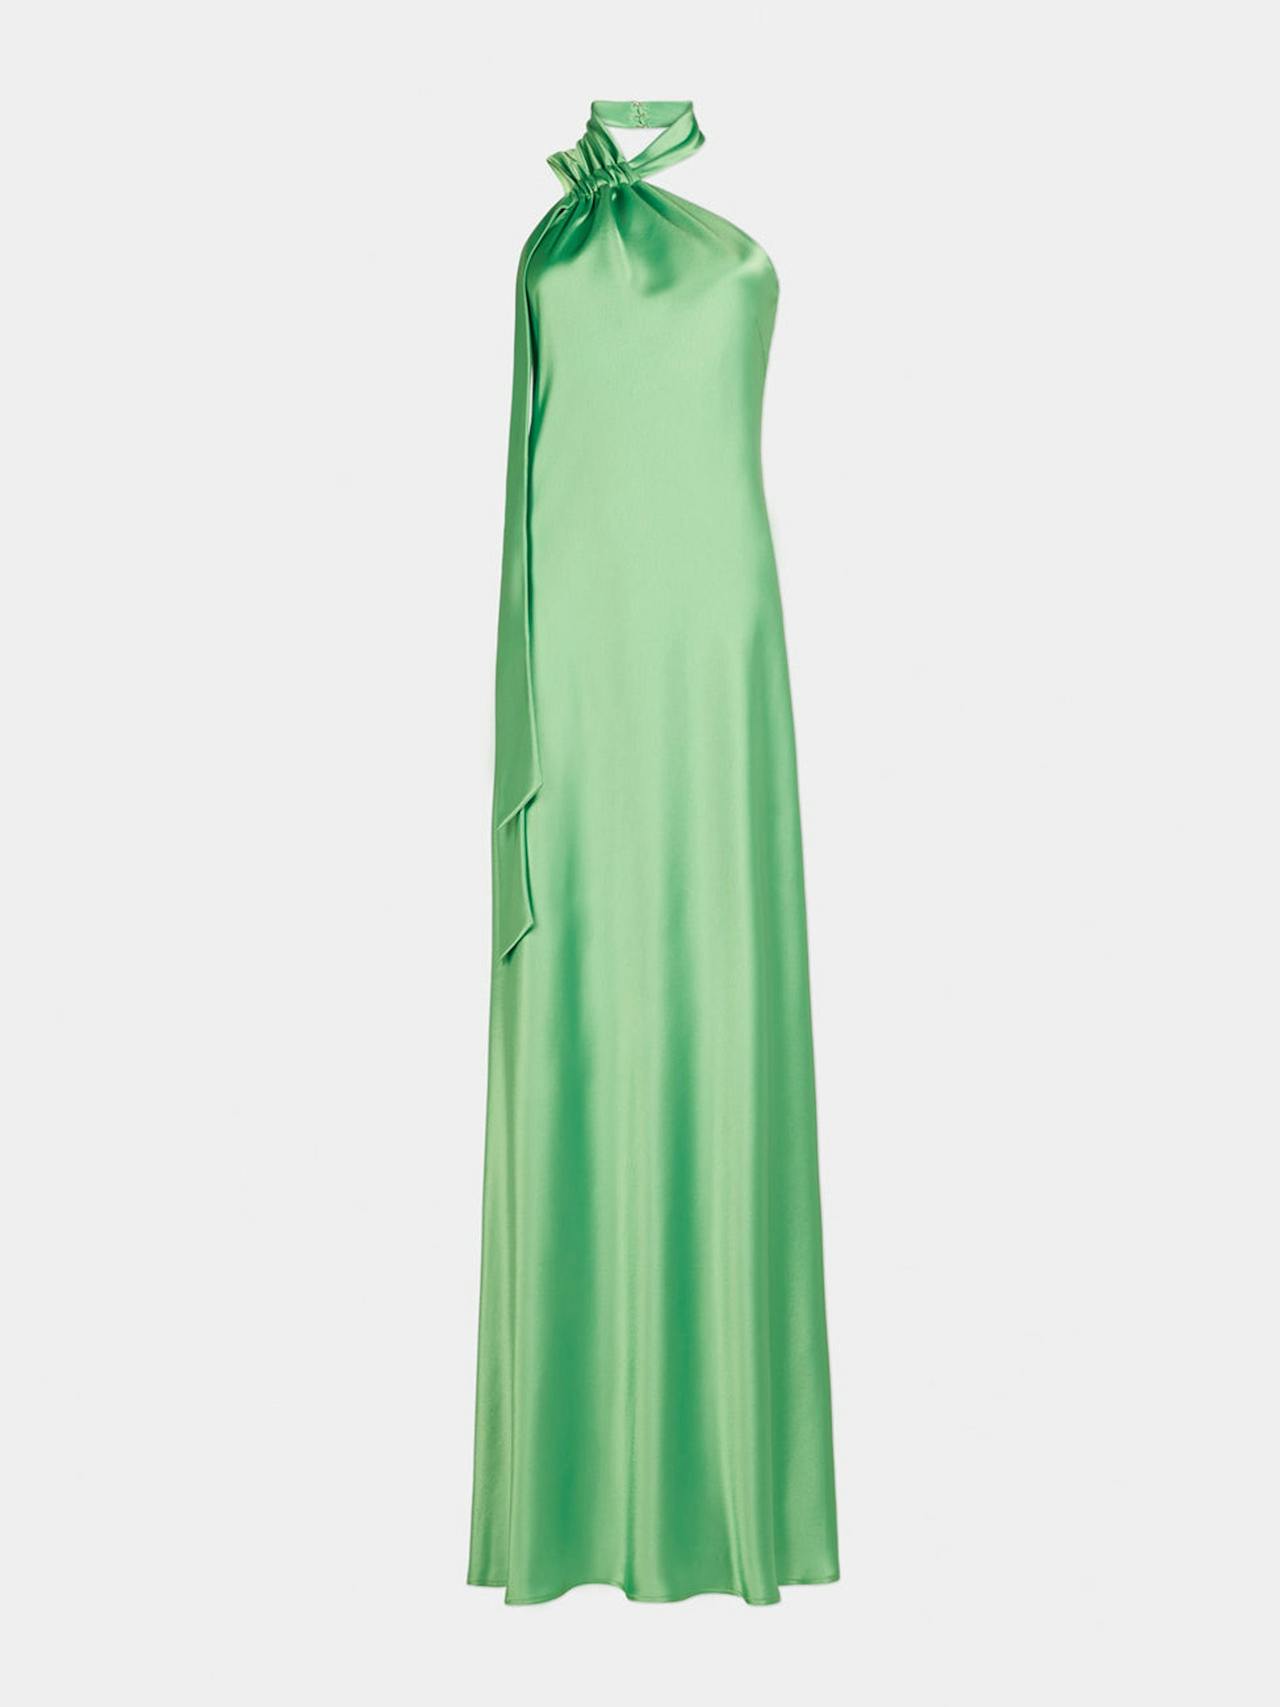 Paris green satin Ushuaia dress